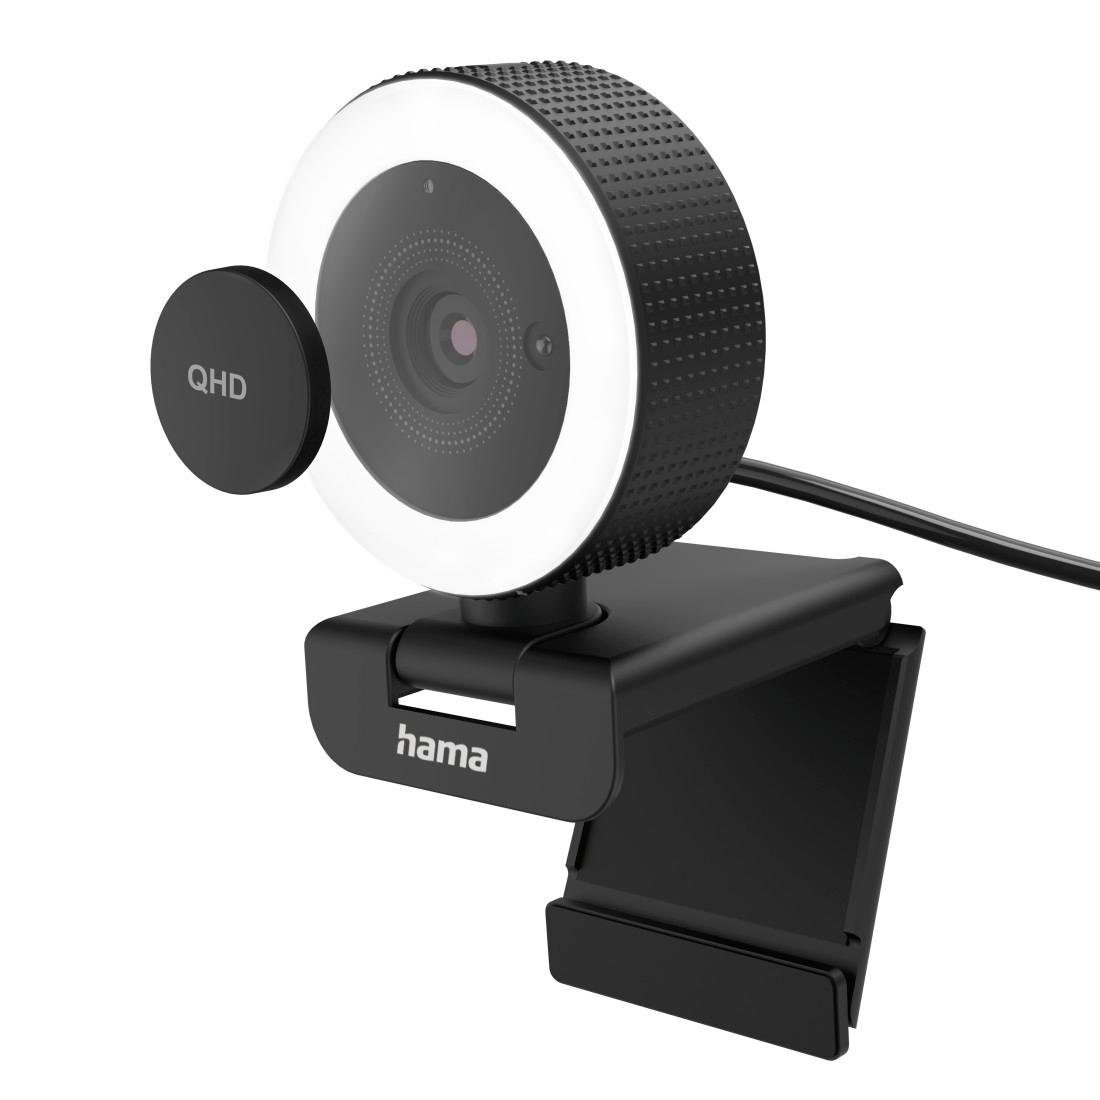 Hama Webcam mit Mikrofon, QHD, Licht Webcam scharfes (PC-Kamera ein Autofokus Fernbedienung) bei Bewegungen auch 2560p, garantiert Bild, USB, (QHD)